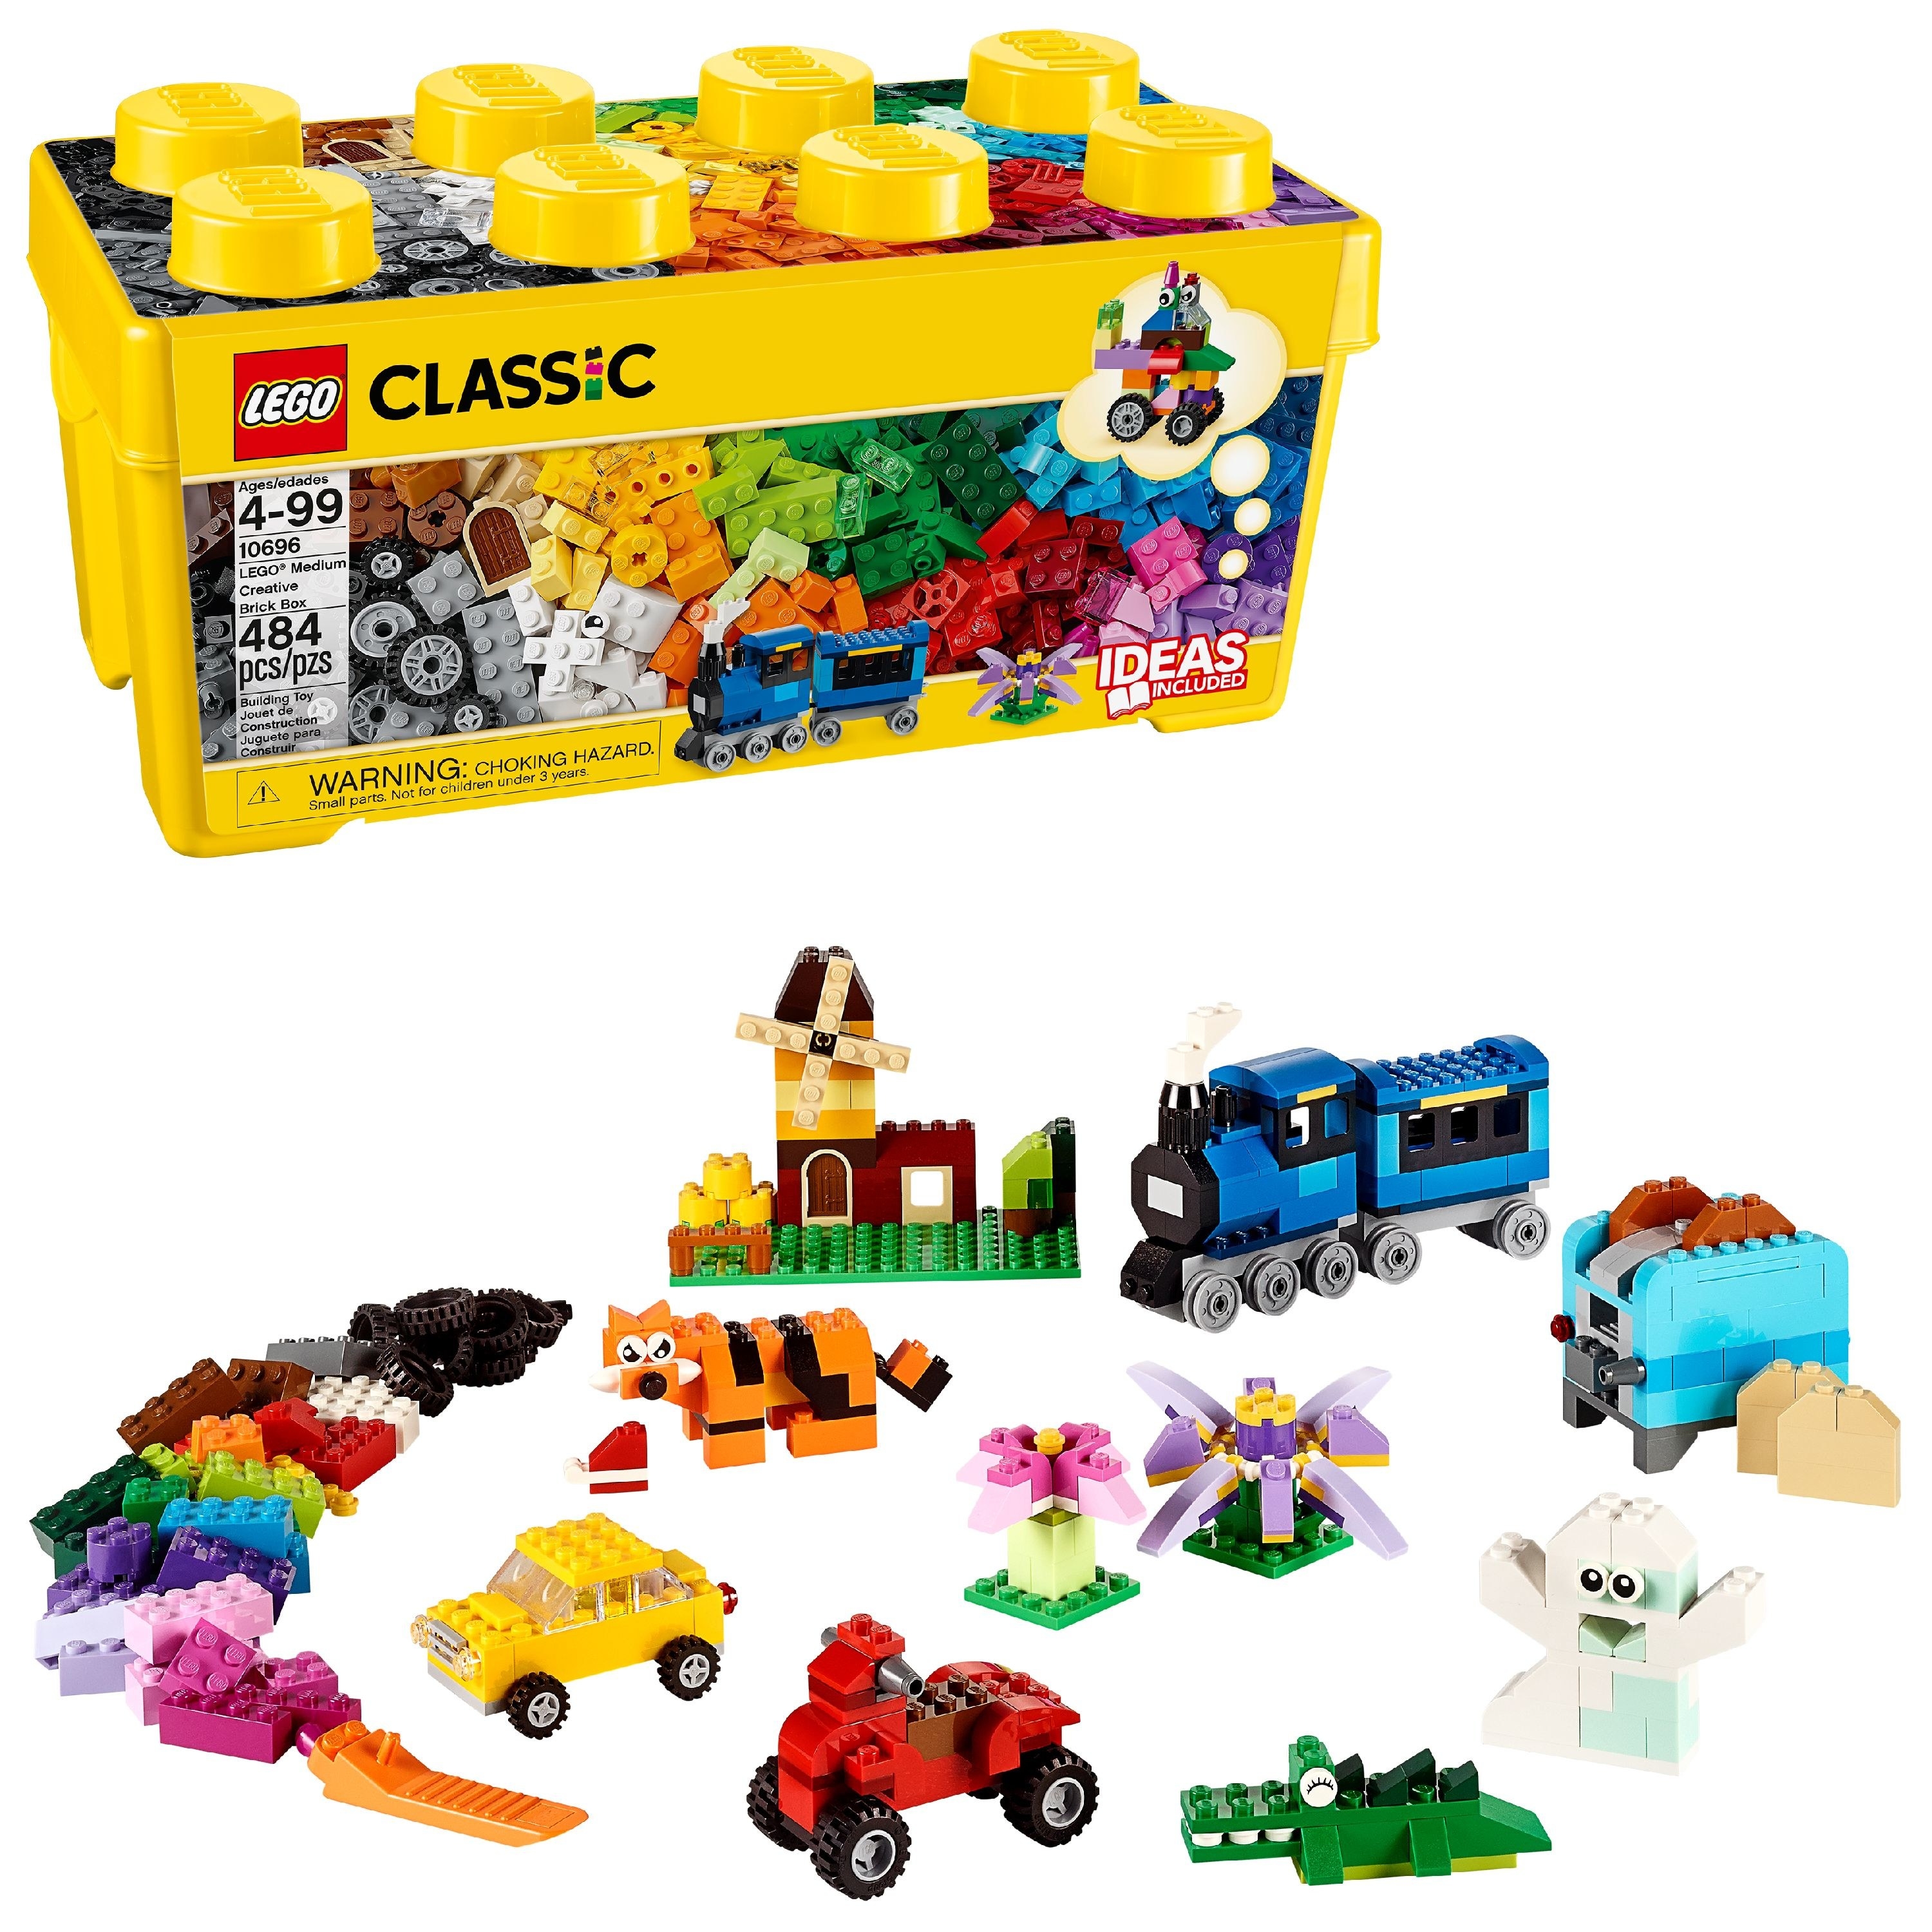 The yellow brick-shaped box and multicolored LEGO bricks